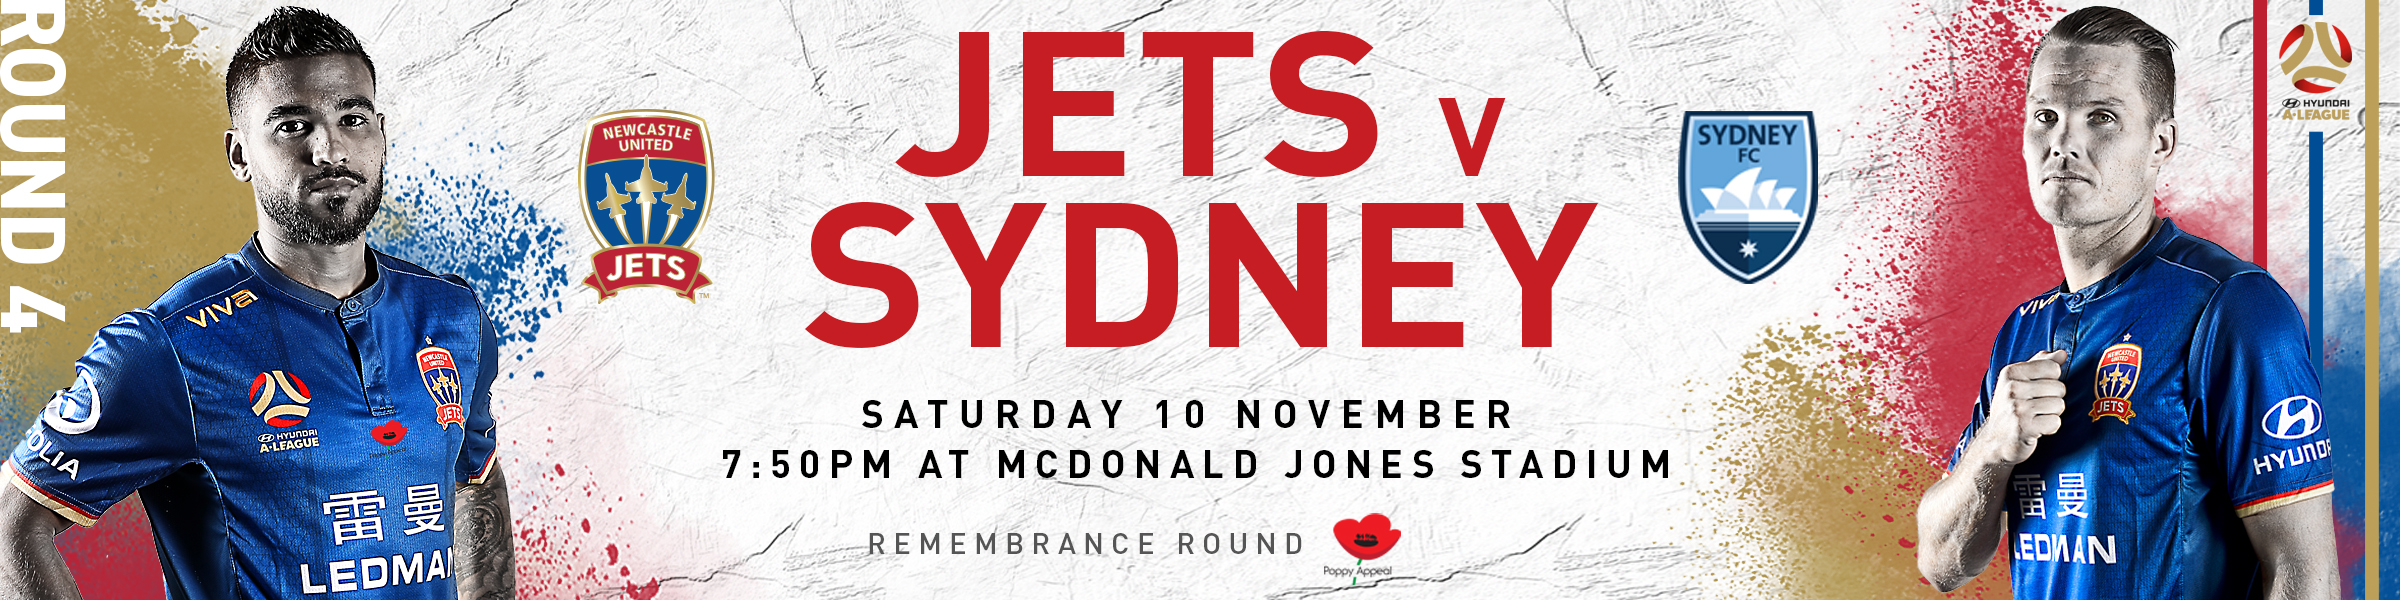 Jets v Sydney